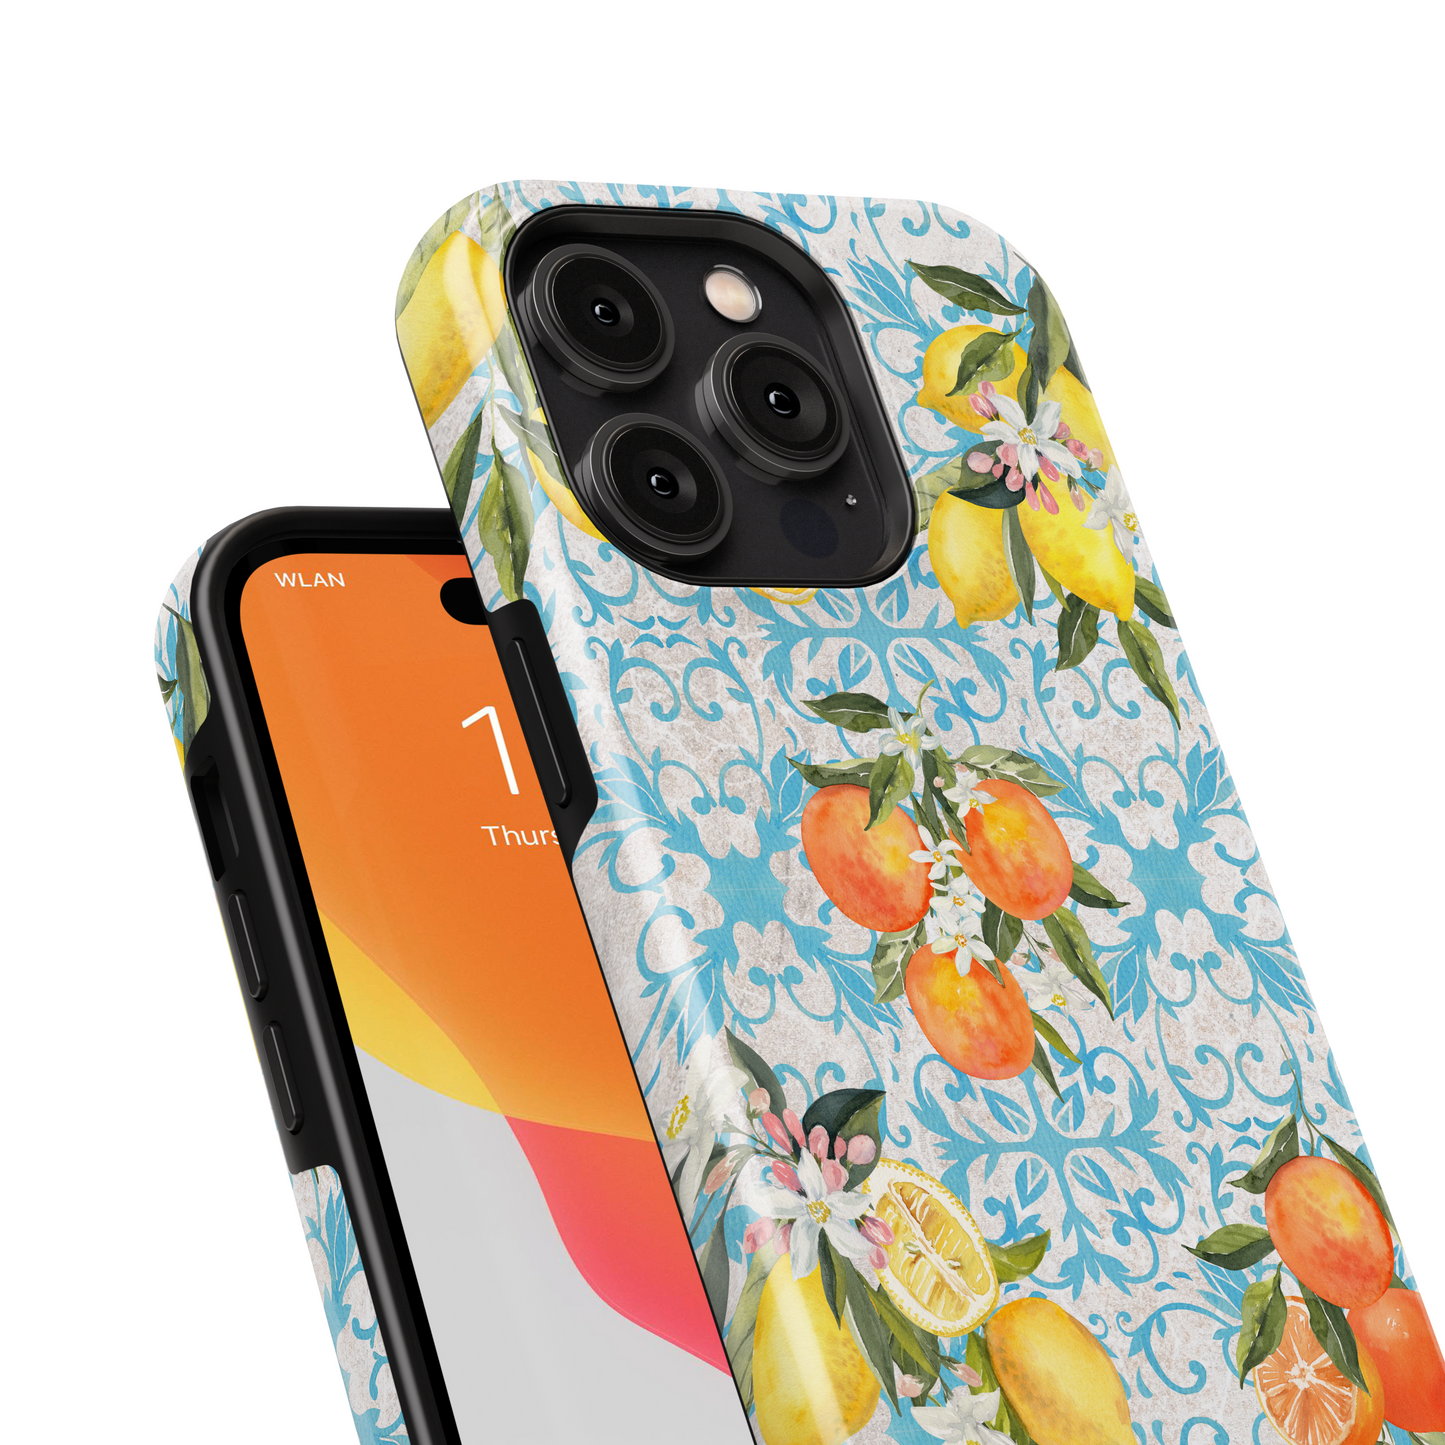 Amalfi Coast Tough iPhone Case